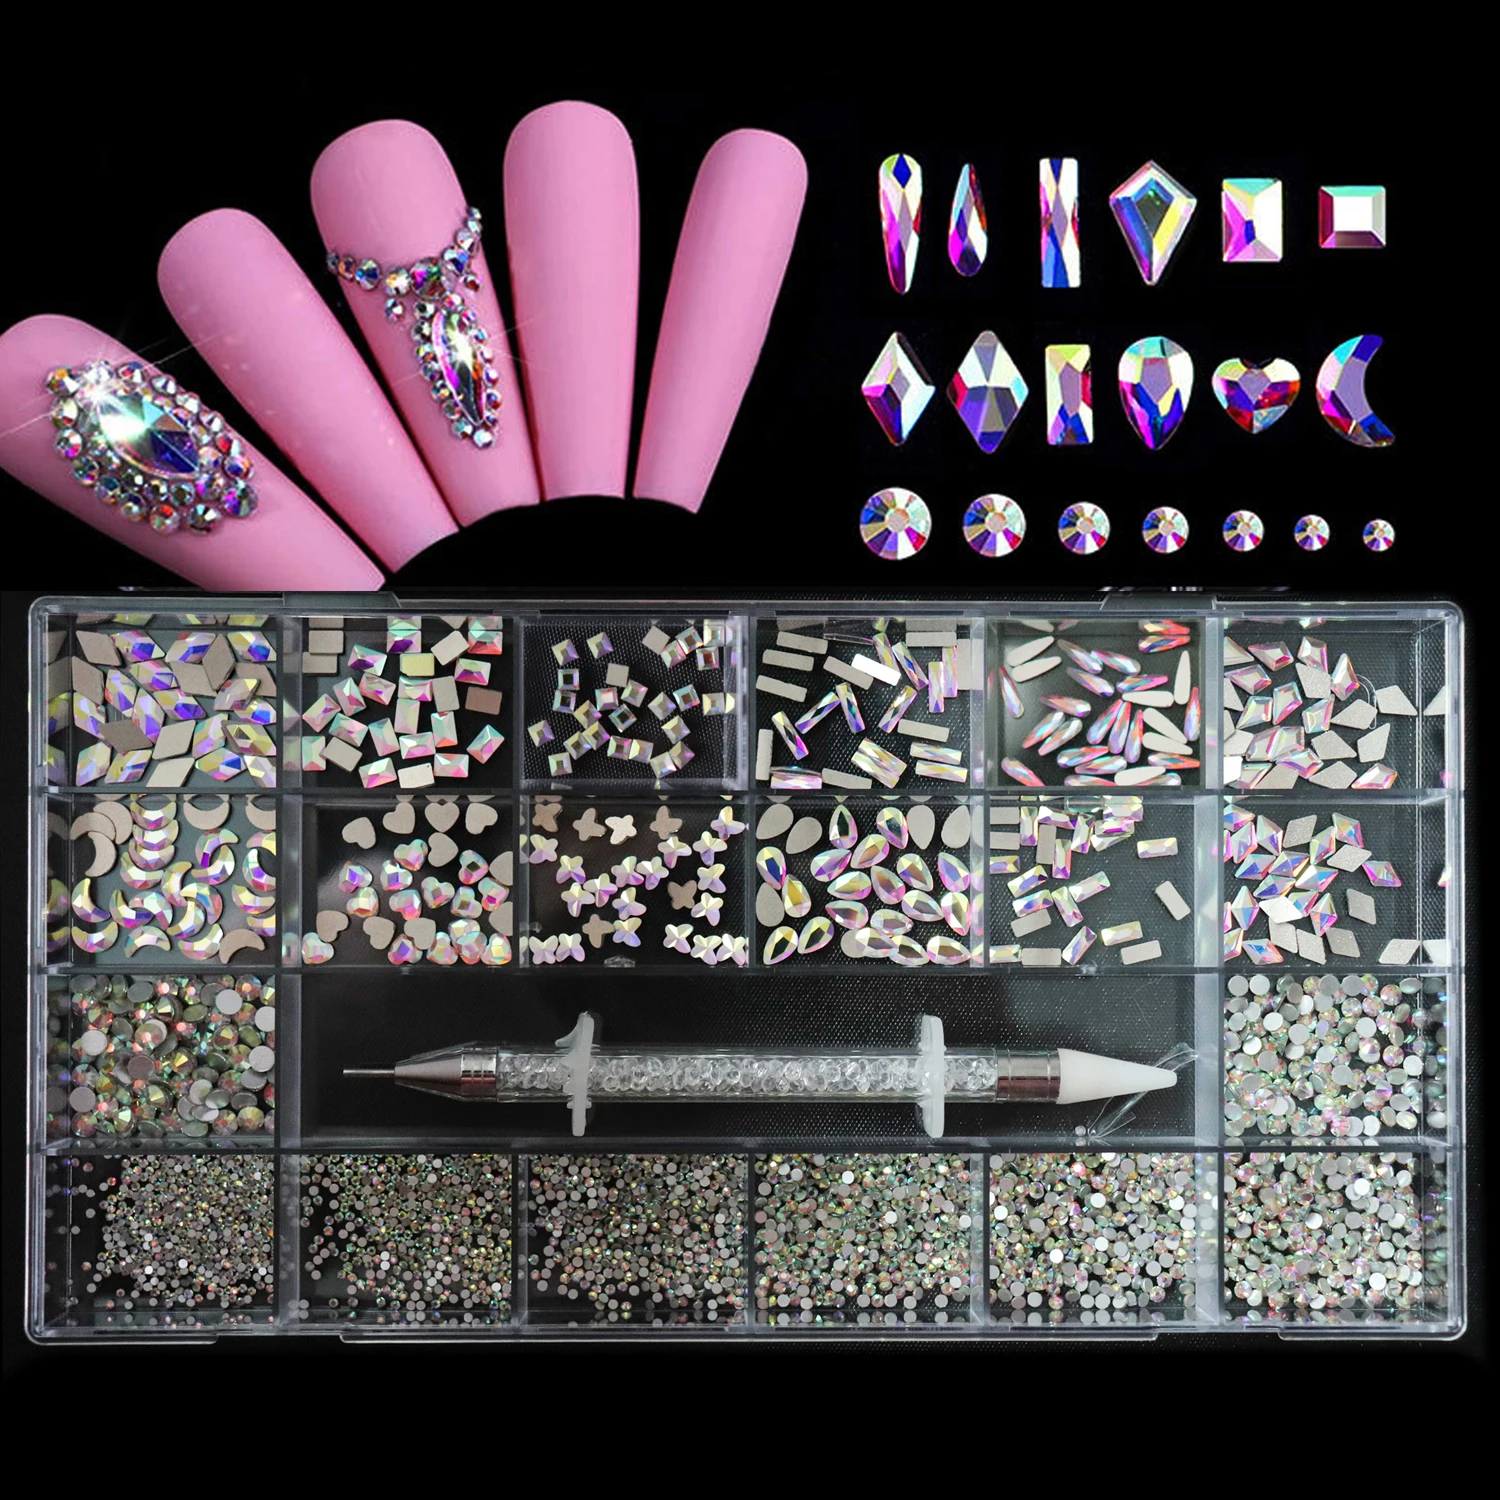 

2500pcs AB Glass Crystal Diamond Flat Rhinestone Nail Art Decoration 21 Grid Box Nails Accessories Set With 1 Pick Up Pen